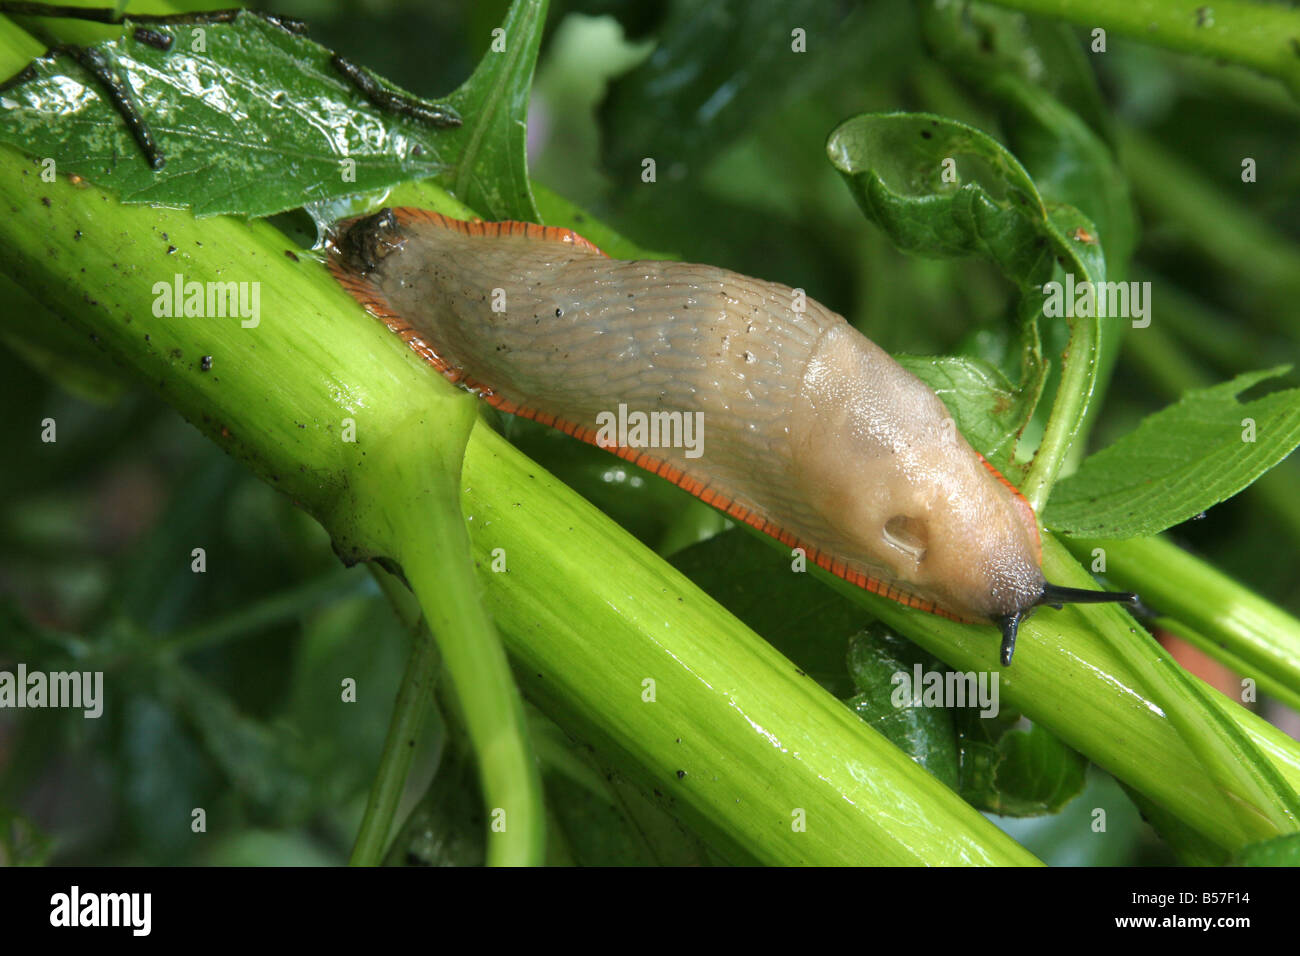 Field Slug (Deroceras sp.) on a Dahlia Stock Photo